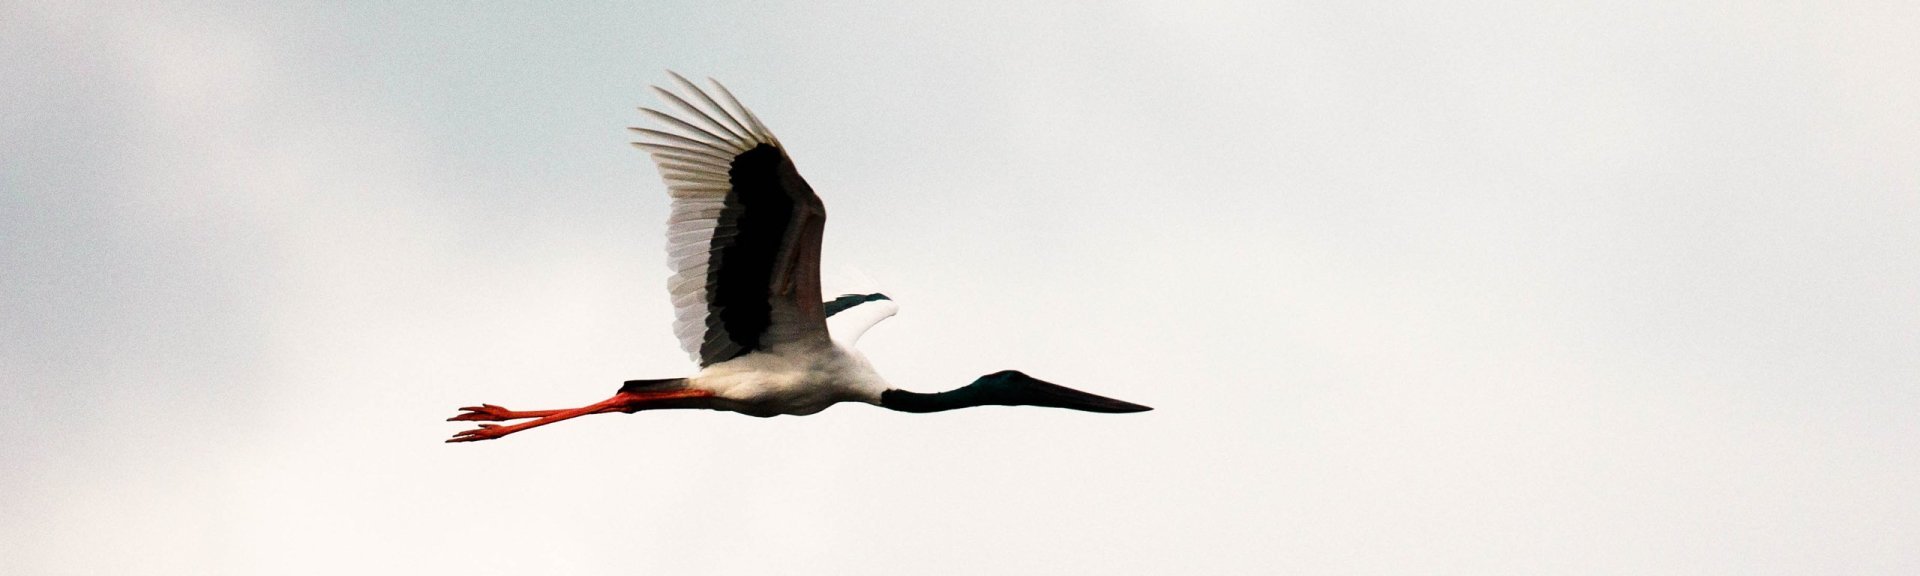 Jabiru in flight. Photo: Northern Pictures